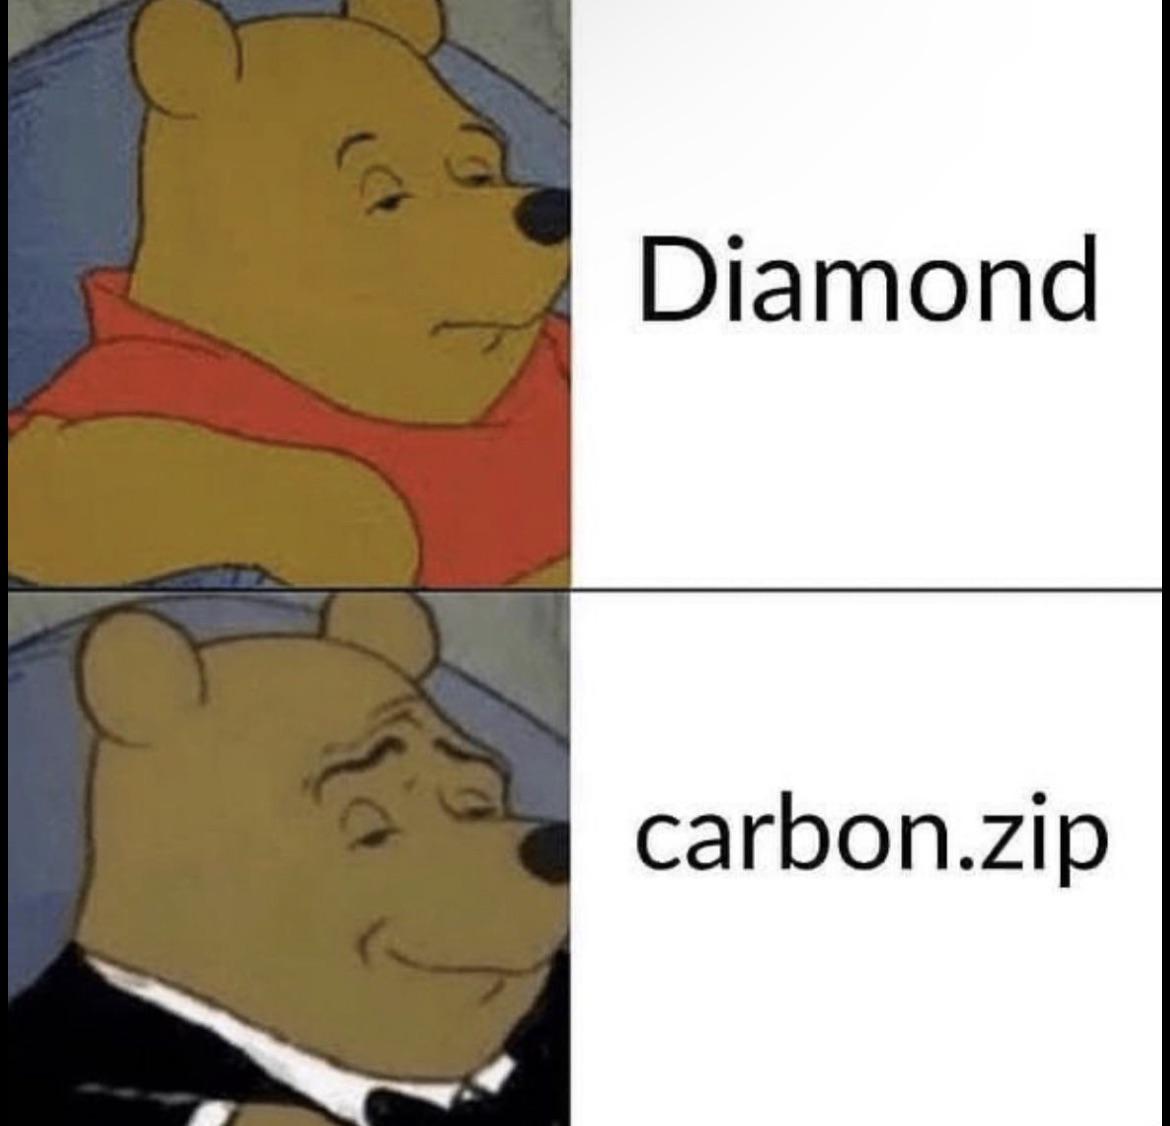 cartoon - Diamond carbon.zip